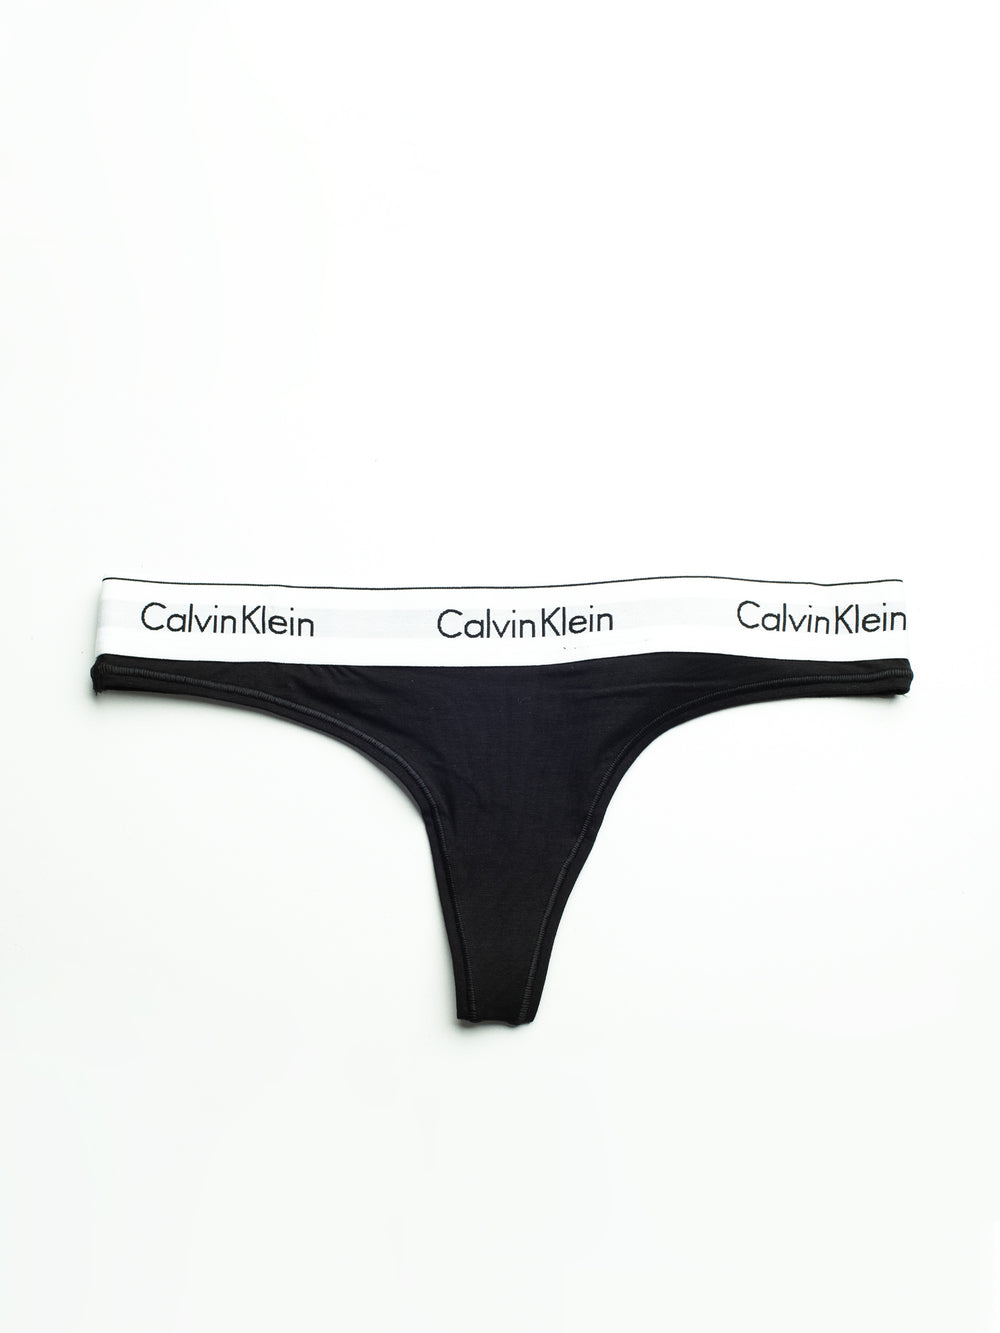 INSTOCK] Calvin Klein Bra Set, Women's Fashion, New Undergarments &  Loungewear on Carousell